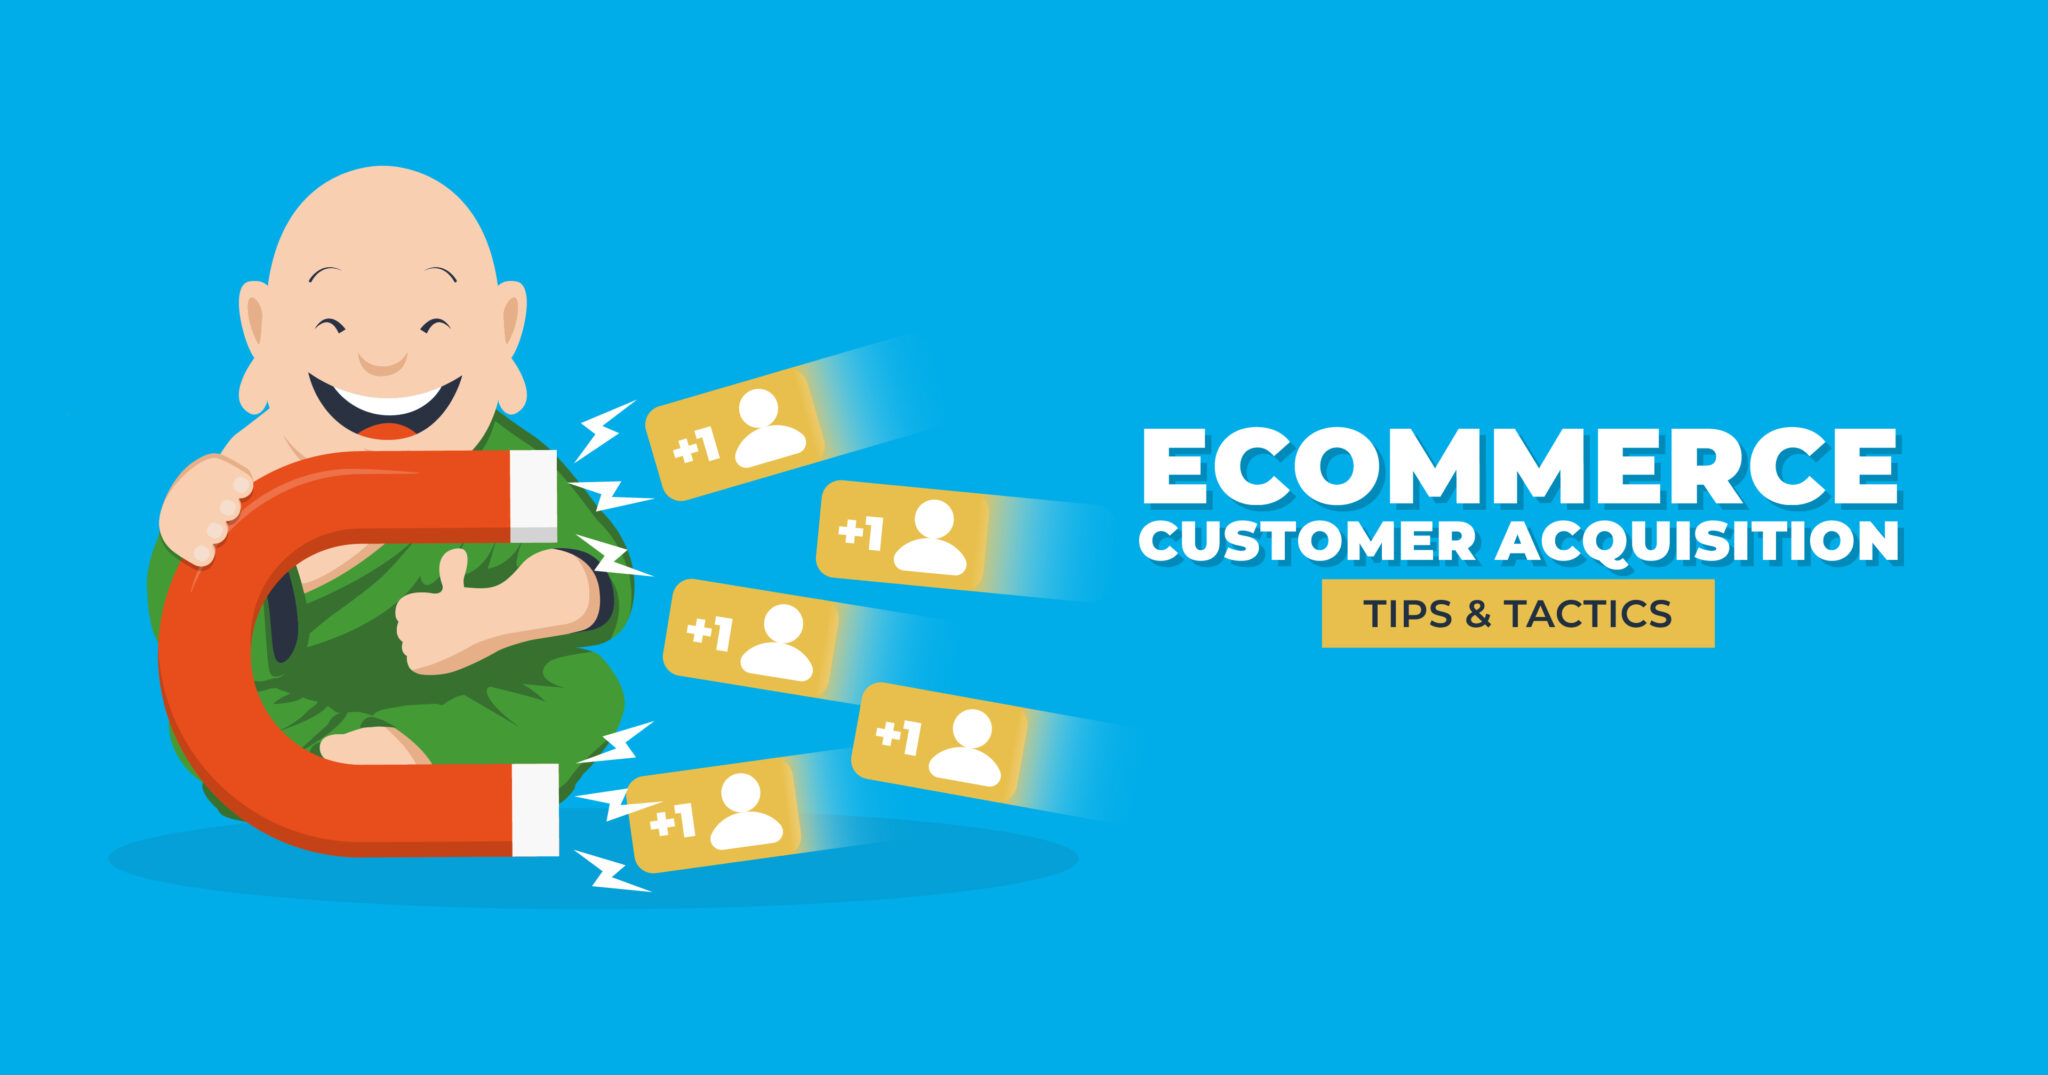 Ecommerce Customer Acquisition Tips & Tactics